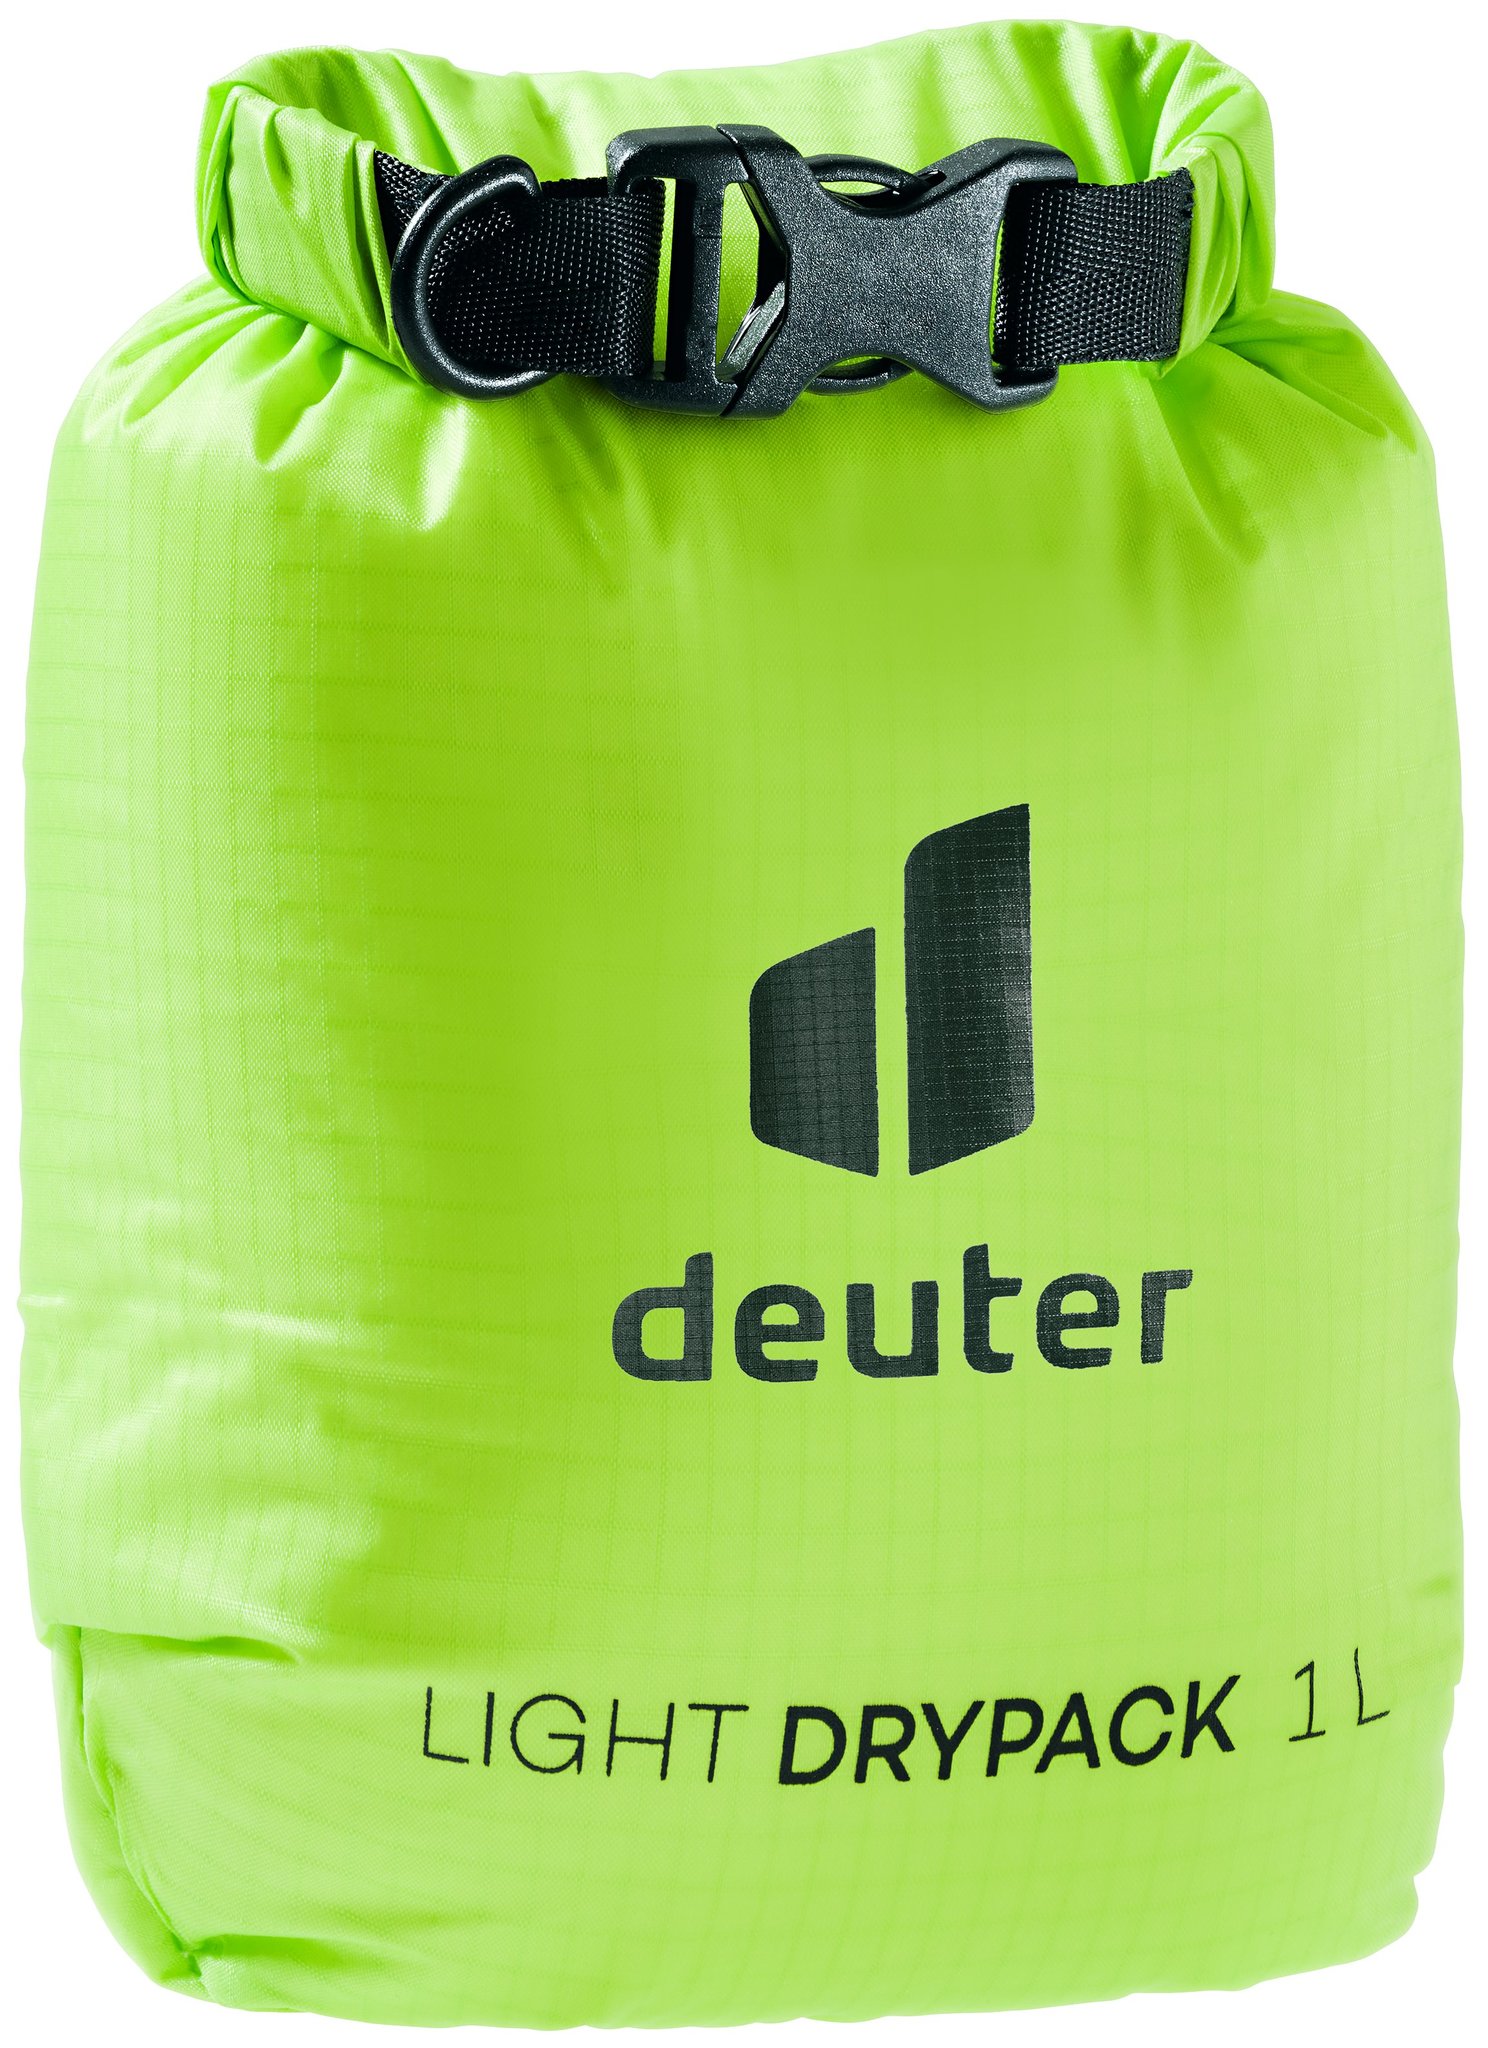 Новинки Гермомешок Deuter Light Drypack 1 0d87776500e5bce80c2737809d40579e.jpeg